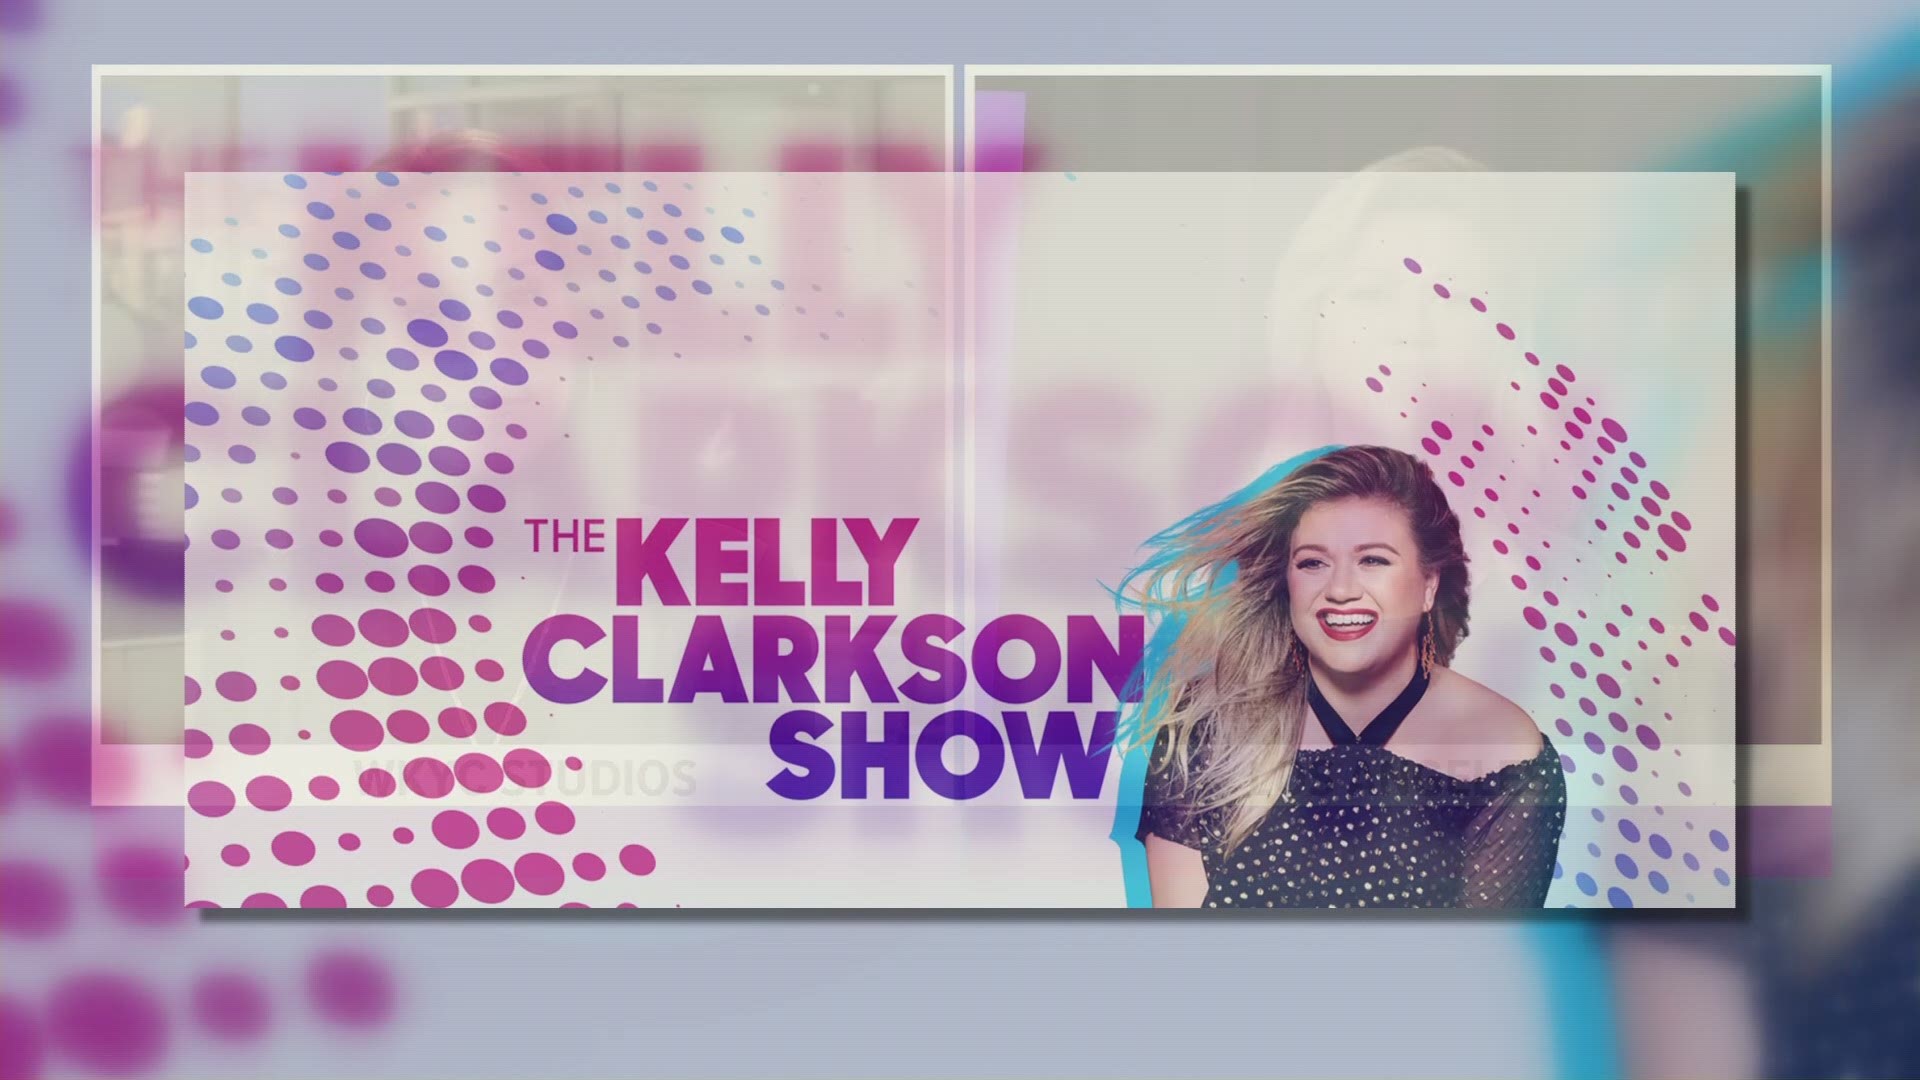 Kelly Clarkson's new talk show to air on WKYC